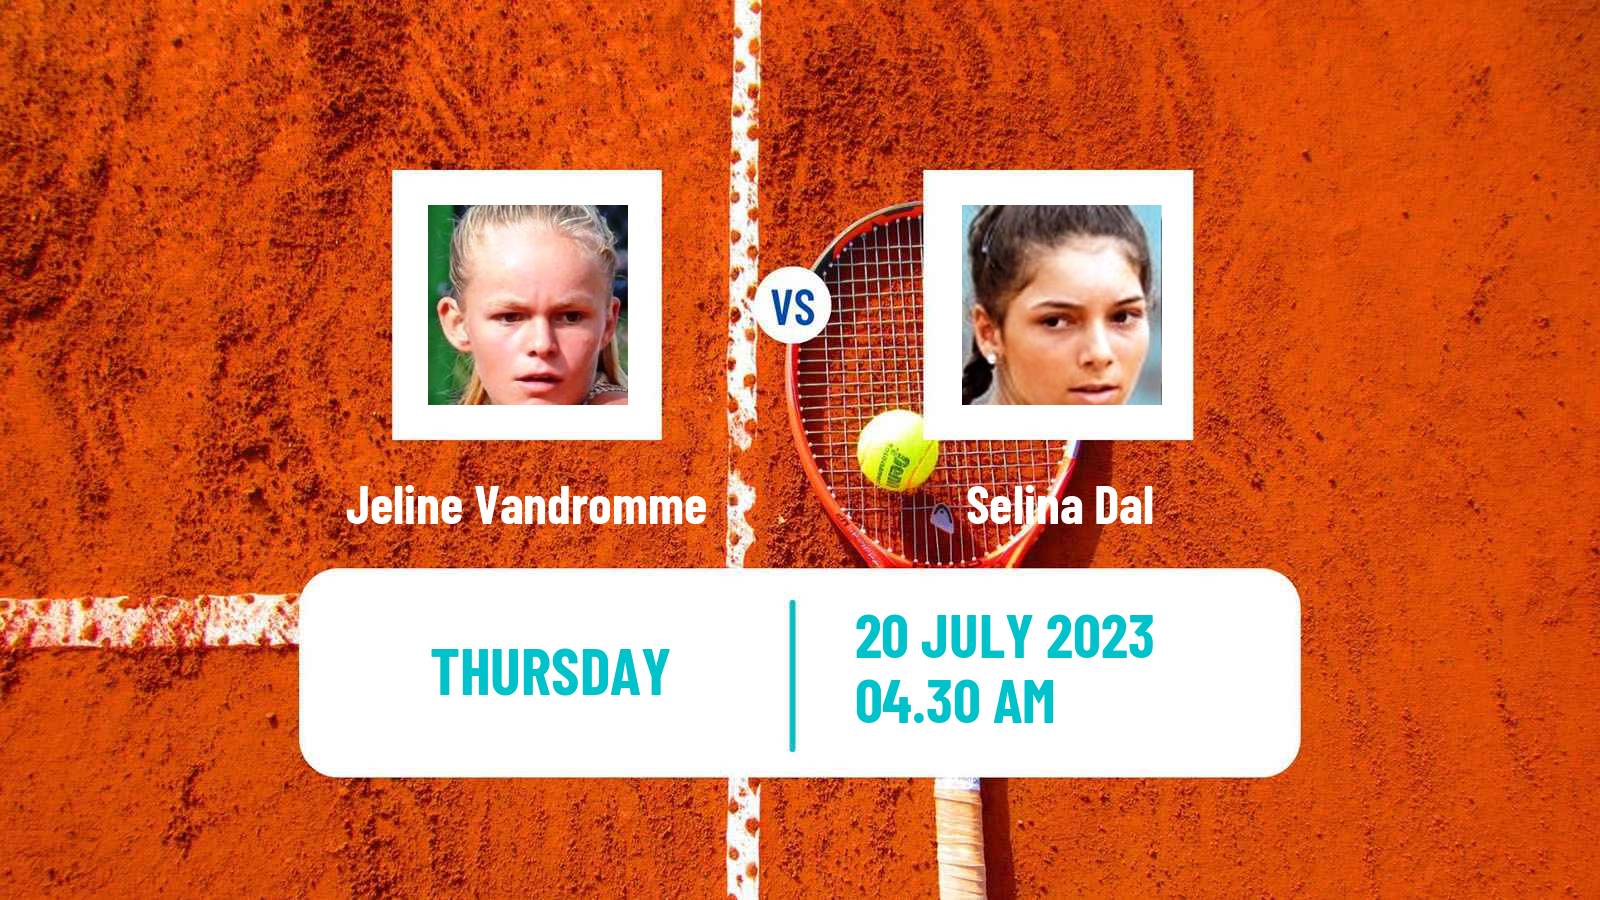 Tennis ITF W15 Les Contamines Montjoie Women Jeline Vandromme - Selina Dal